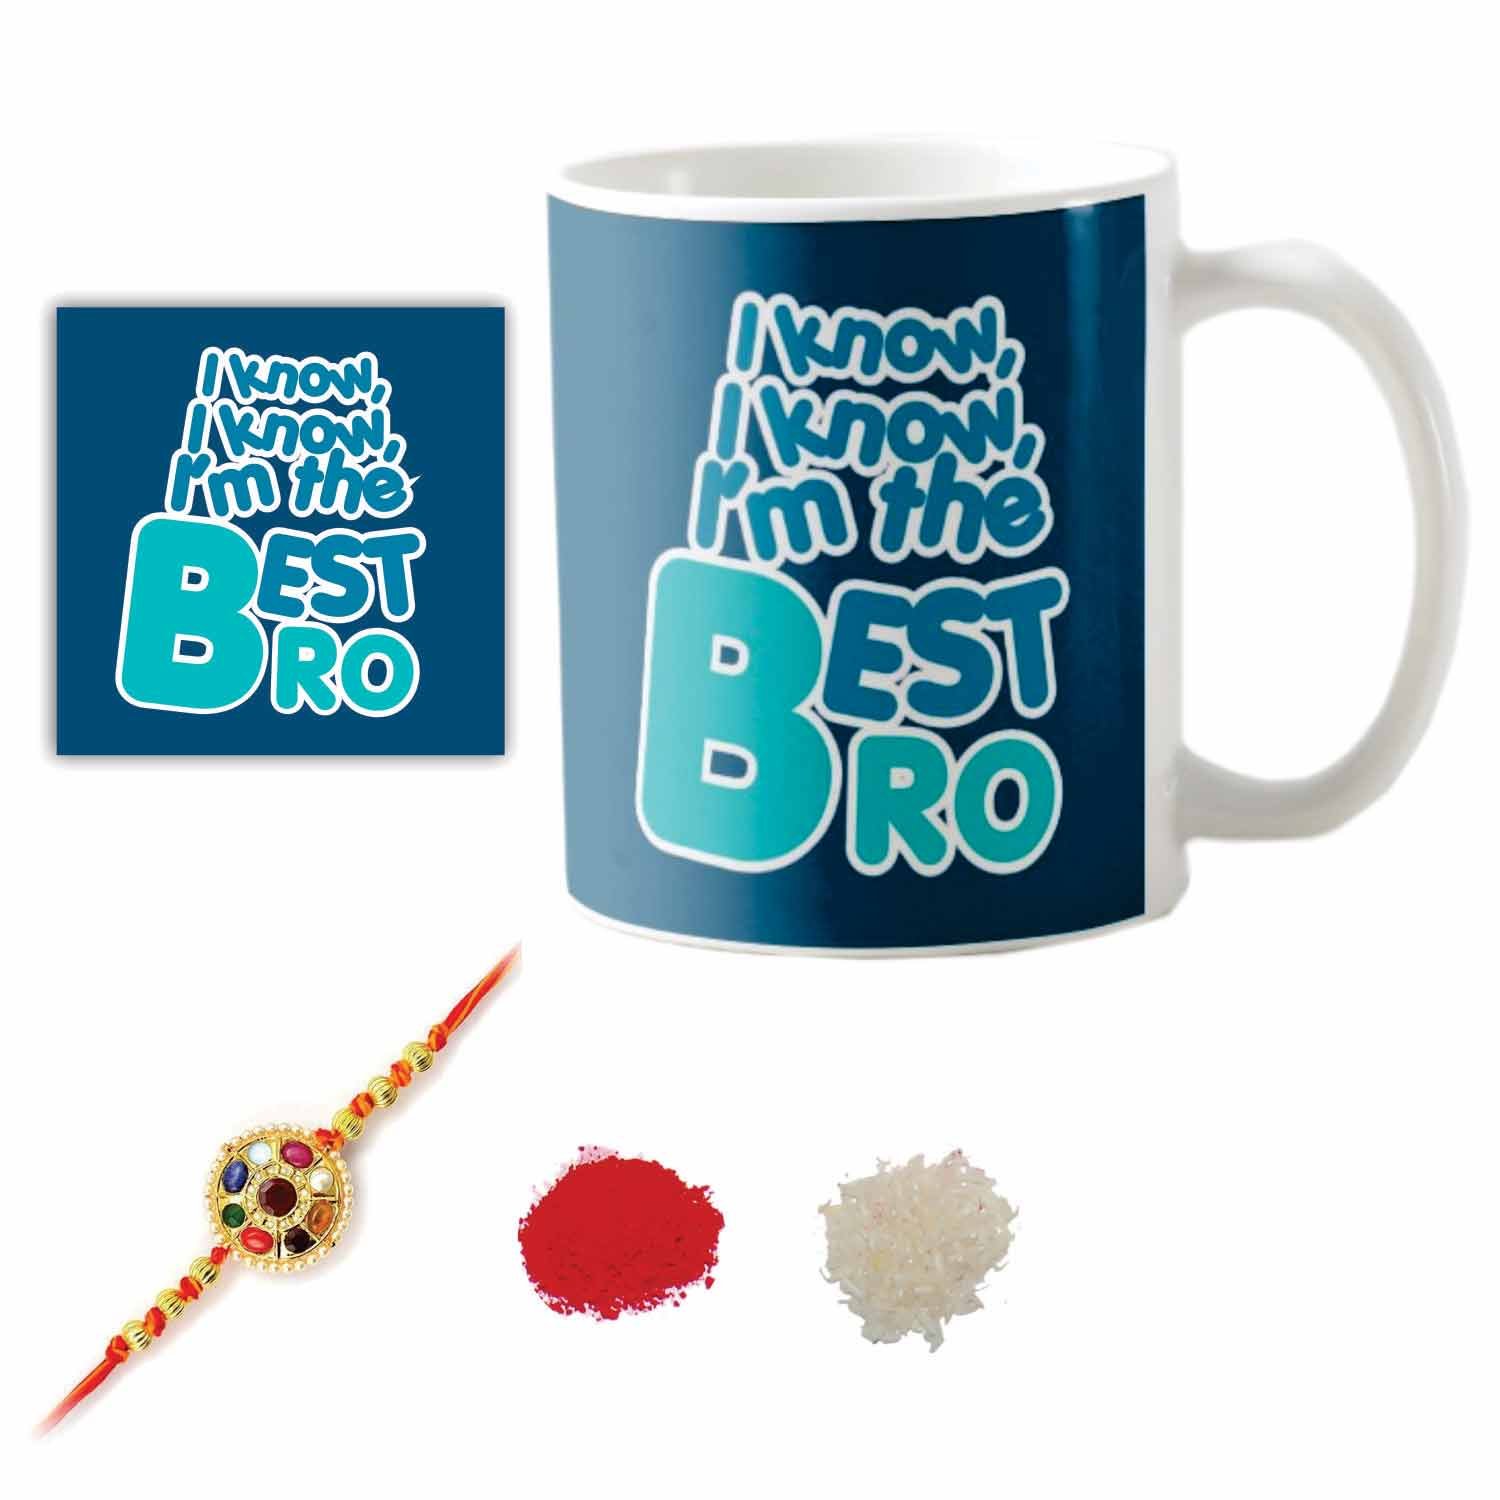 I Know I am The Best Bro Coffee Mug With Coaster Roli Chawal